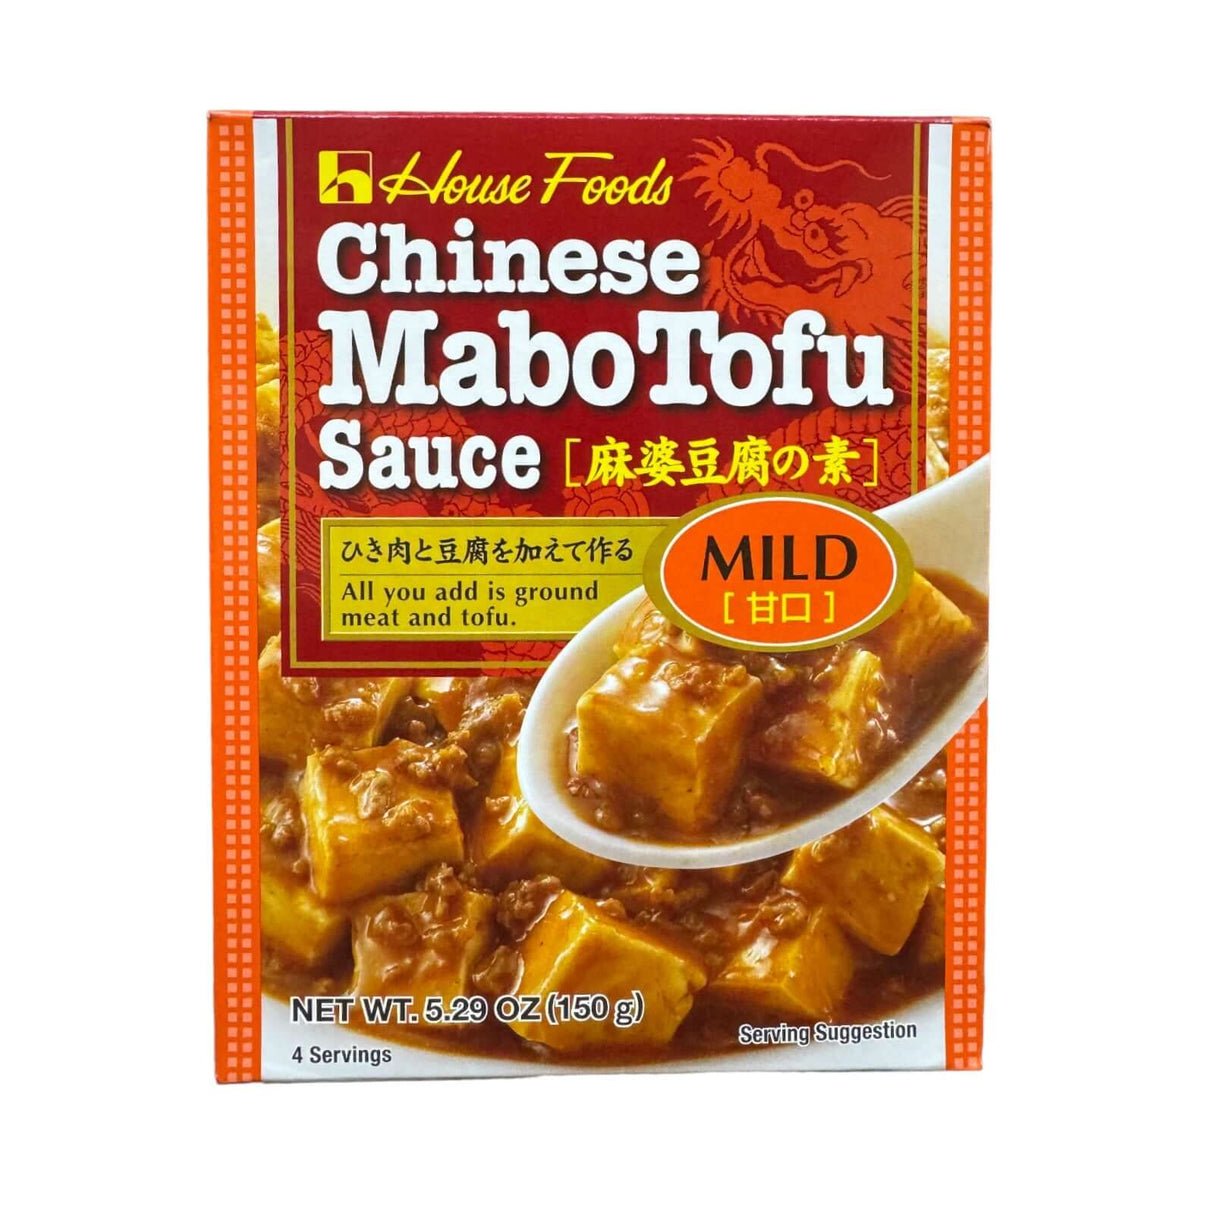 House Foods Chinese Mabo tofu Sauce Mild